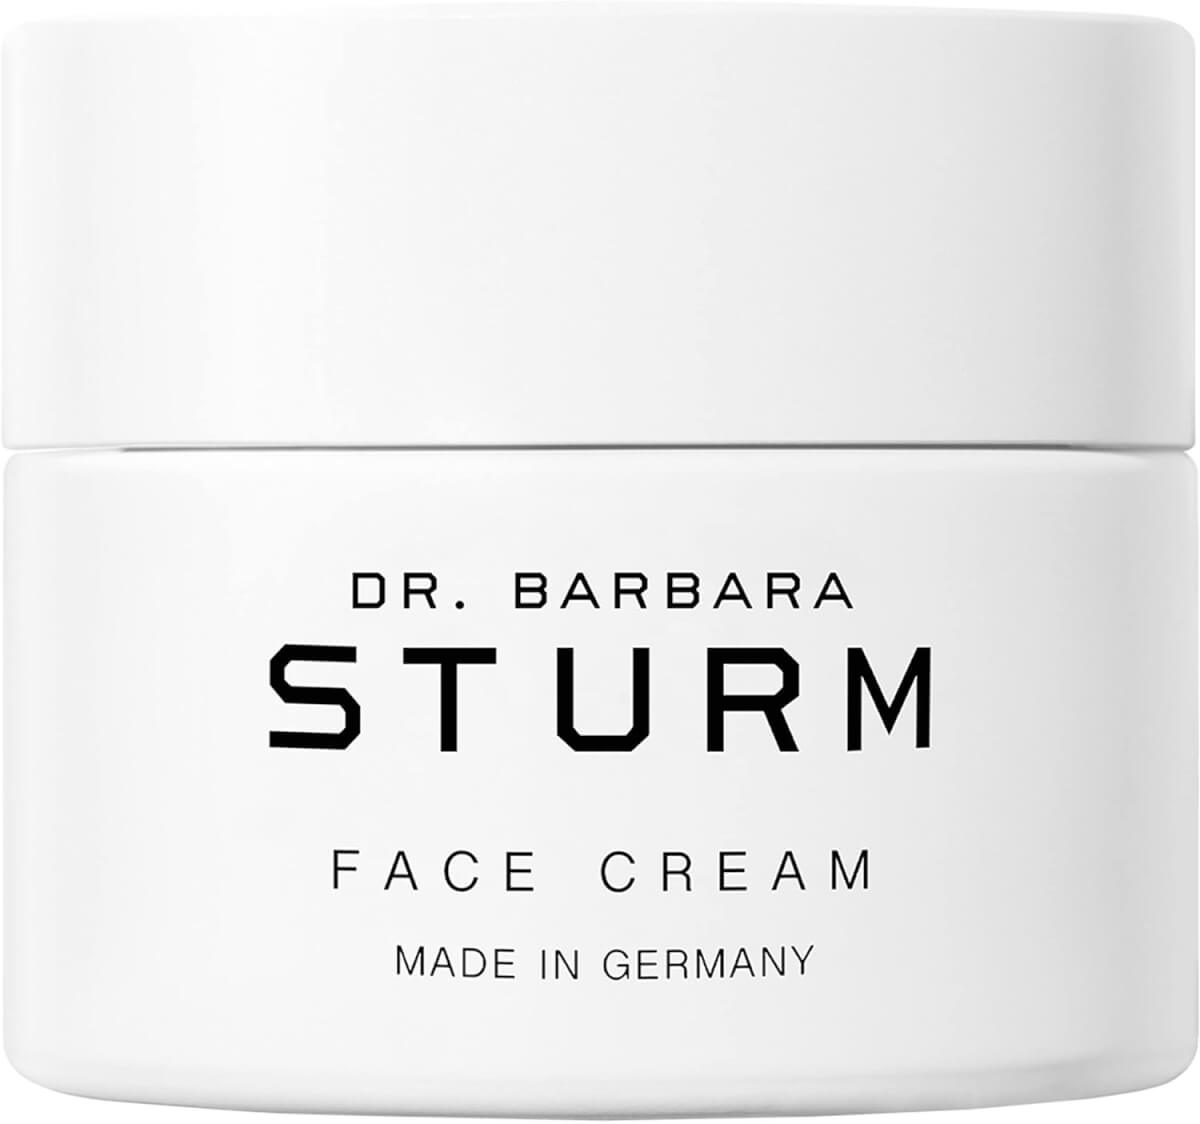 Dr. Barbara Sturm "The Original" Molecular Cosmetics Face Cream